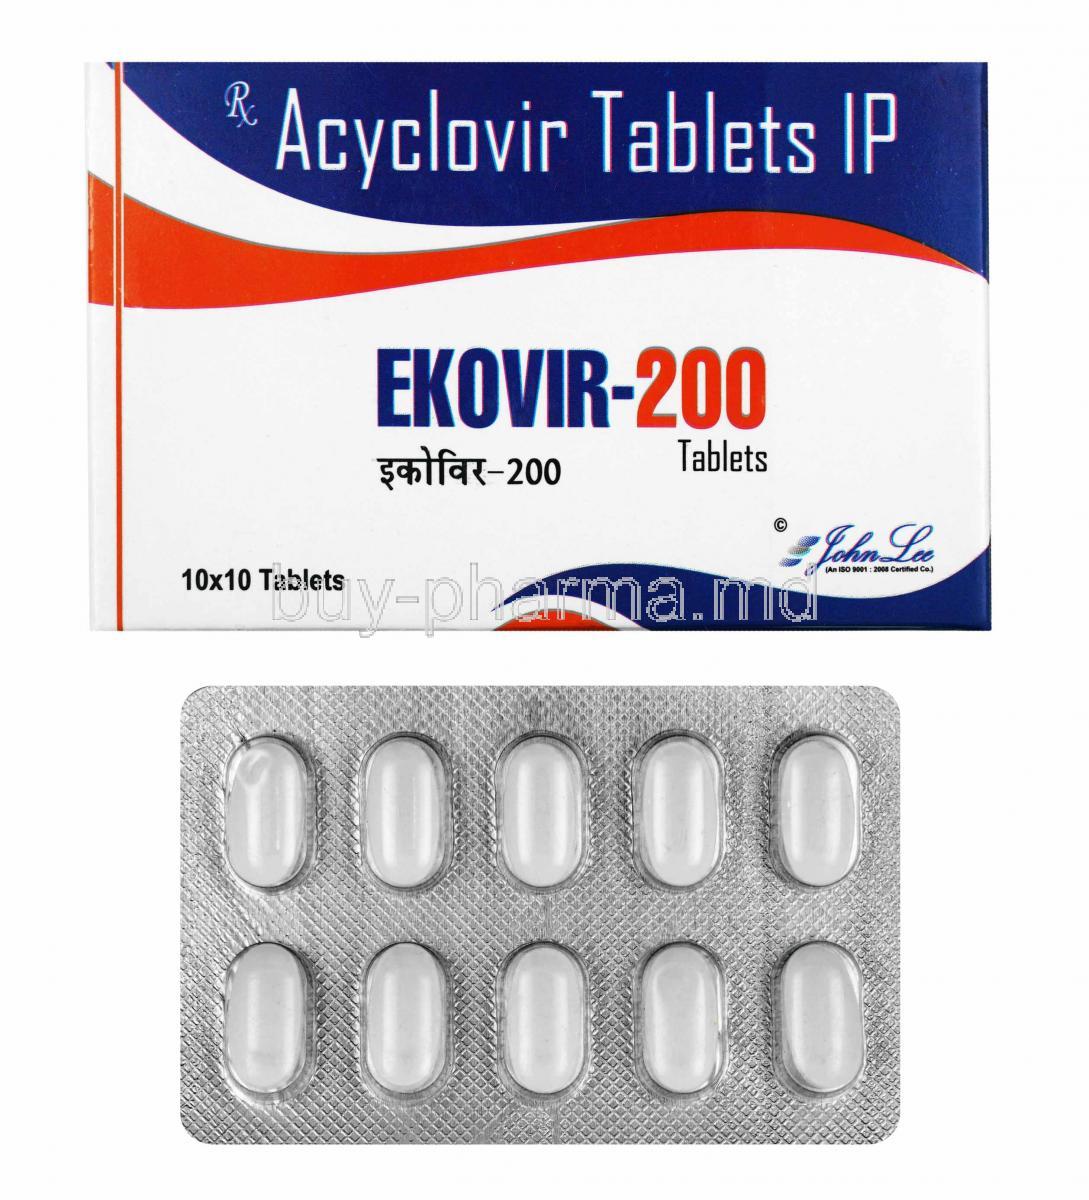 Ekovir, Acyclovir 200mg box and tablets